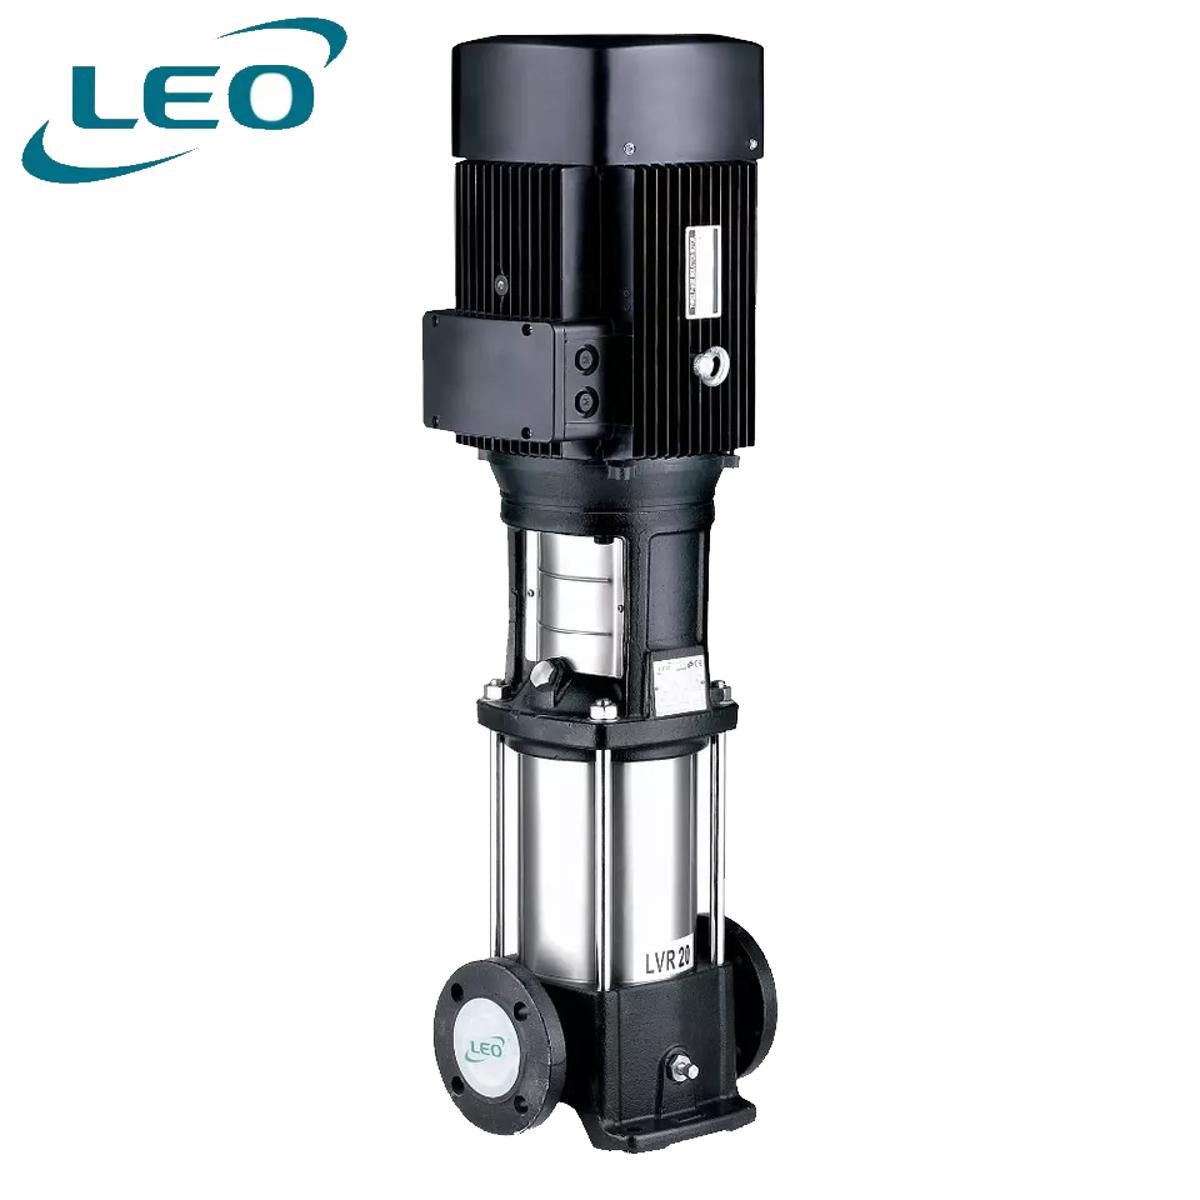 LEO - LVR-20-17 - 18500 W - 25 HP (IE2) -  Vertical Multistage Booster  - HIGH PRESSURE Pump - SIZE 2" X  2" - THREE PHASE - European STANDARD